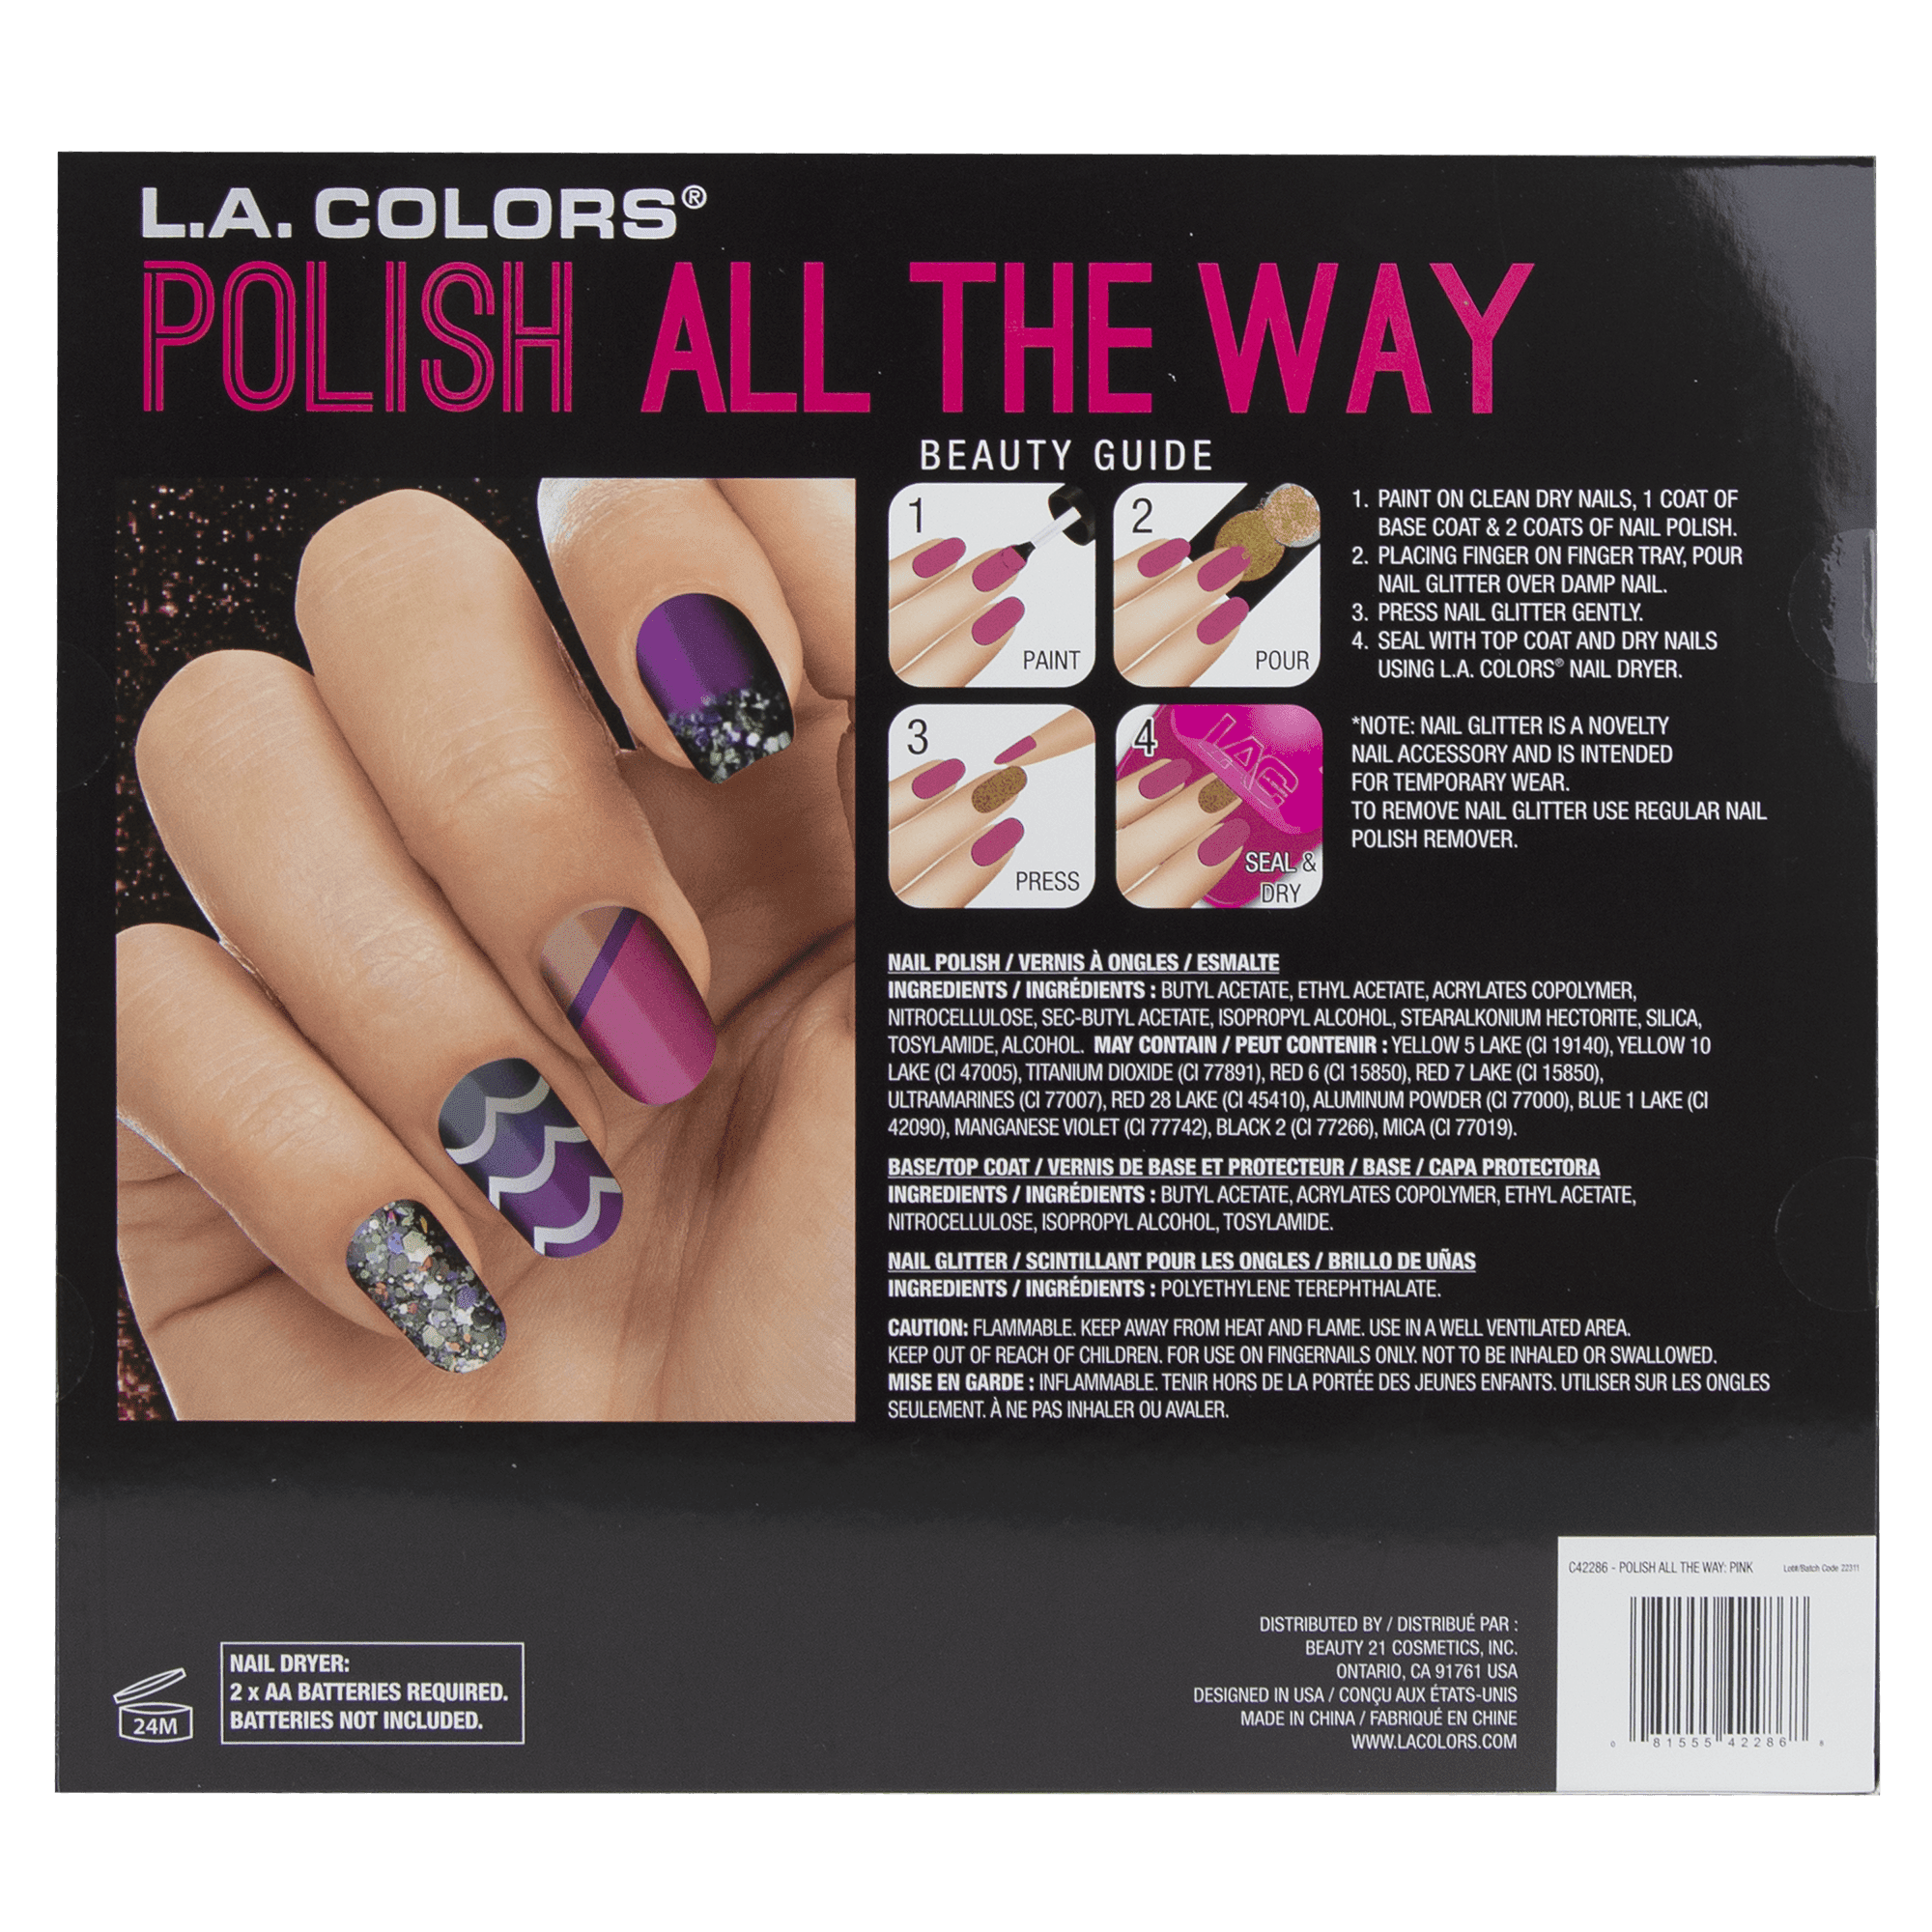 LA COLORS 40pc Polish All The Way Nail Dryer, Nail Polish, Glitter,  Sticker, and Nail File Set 